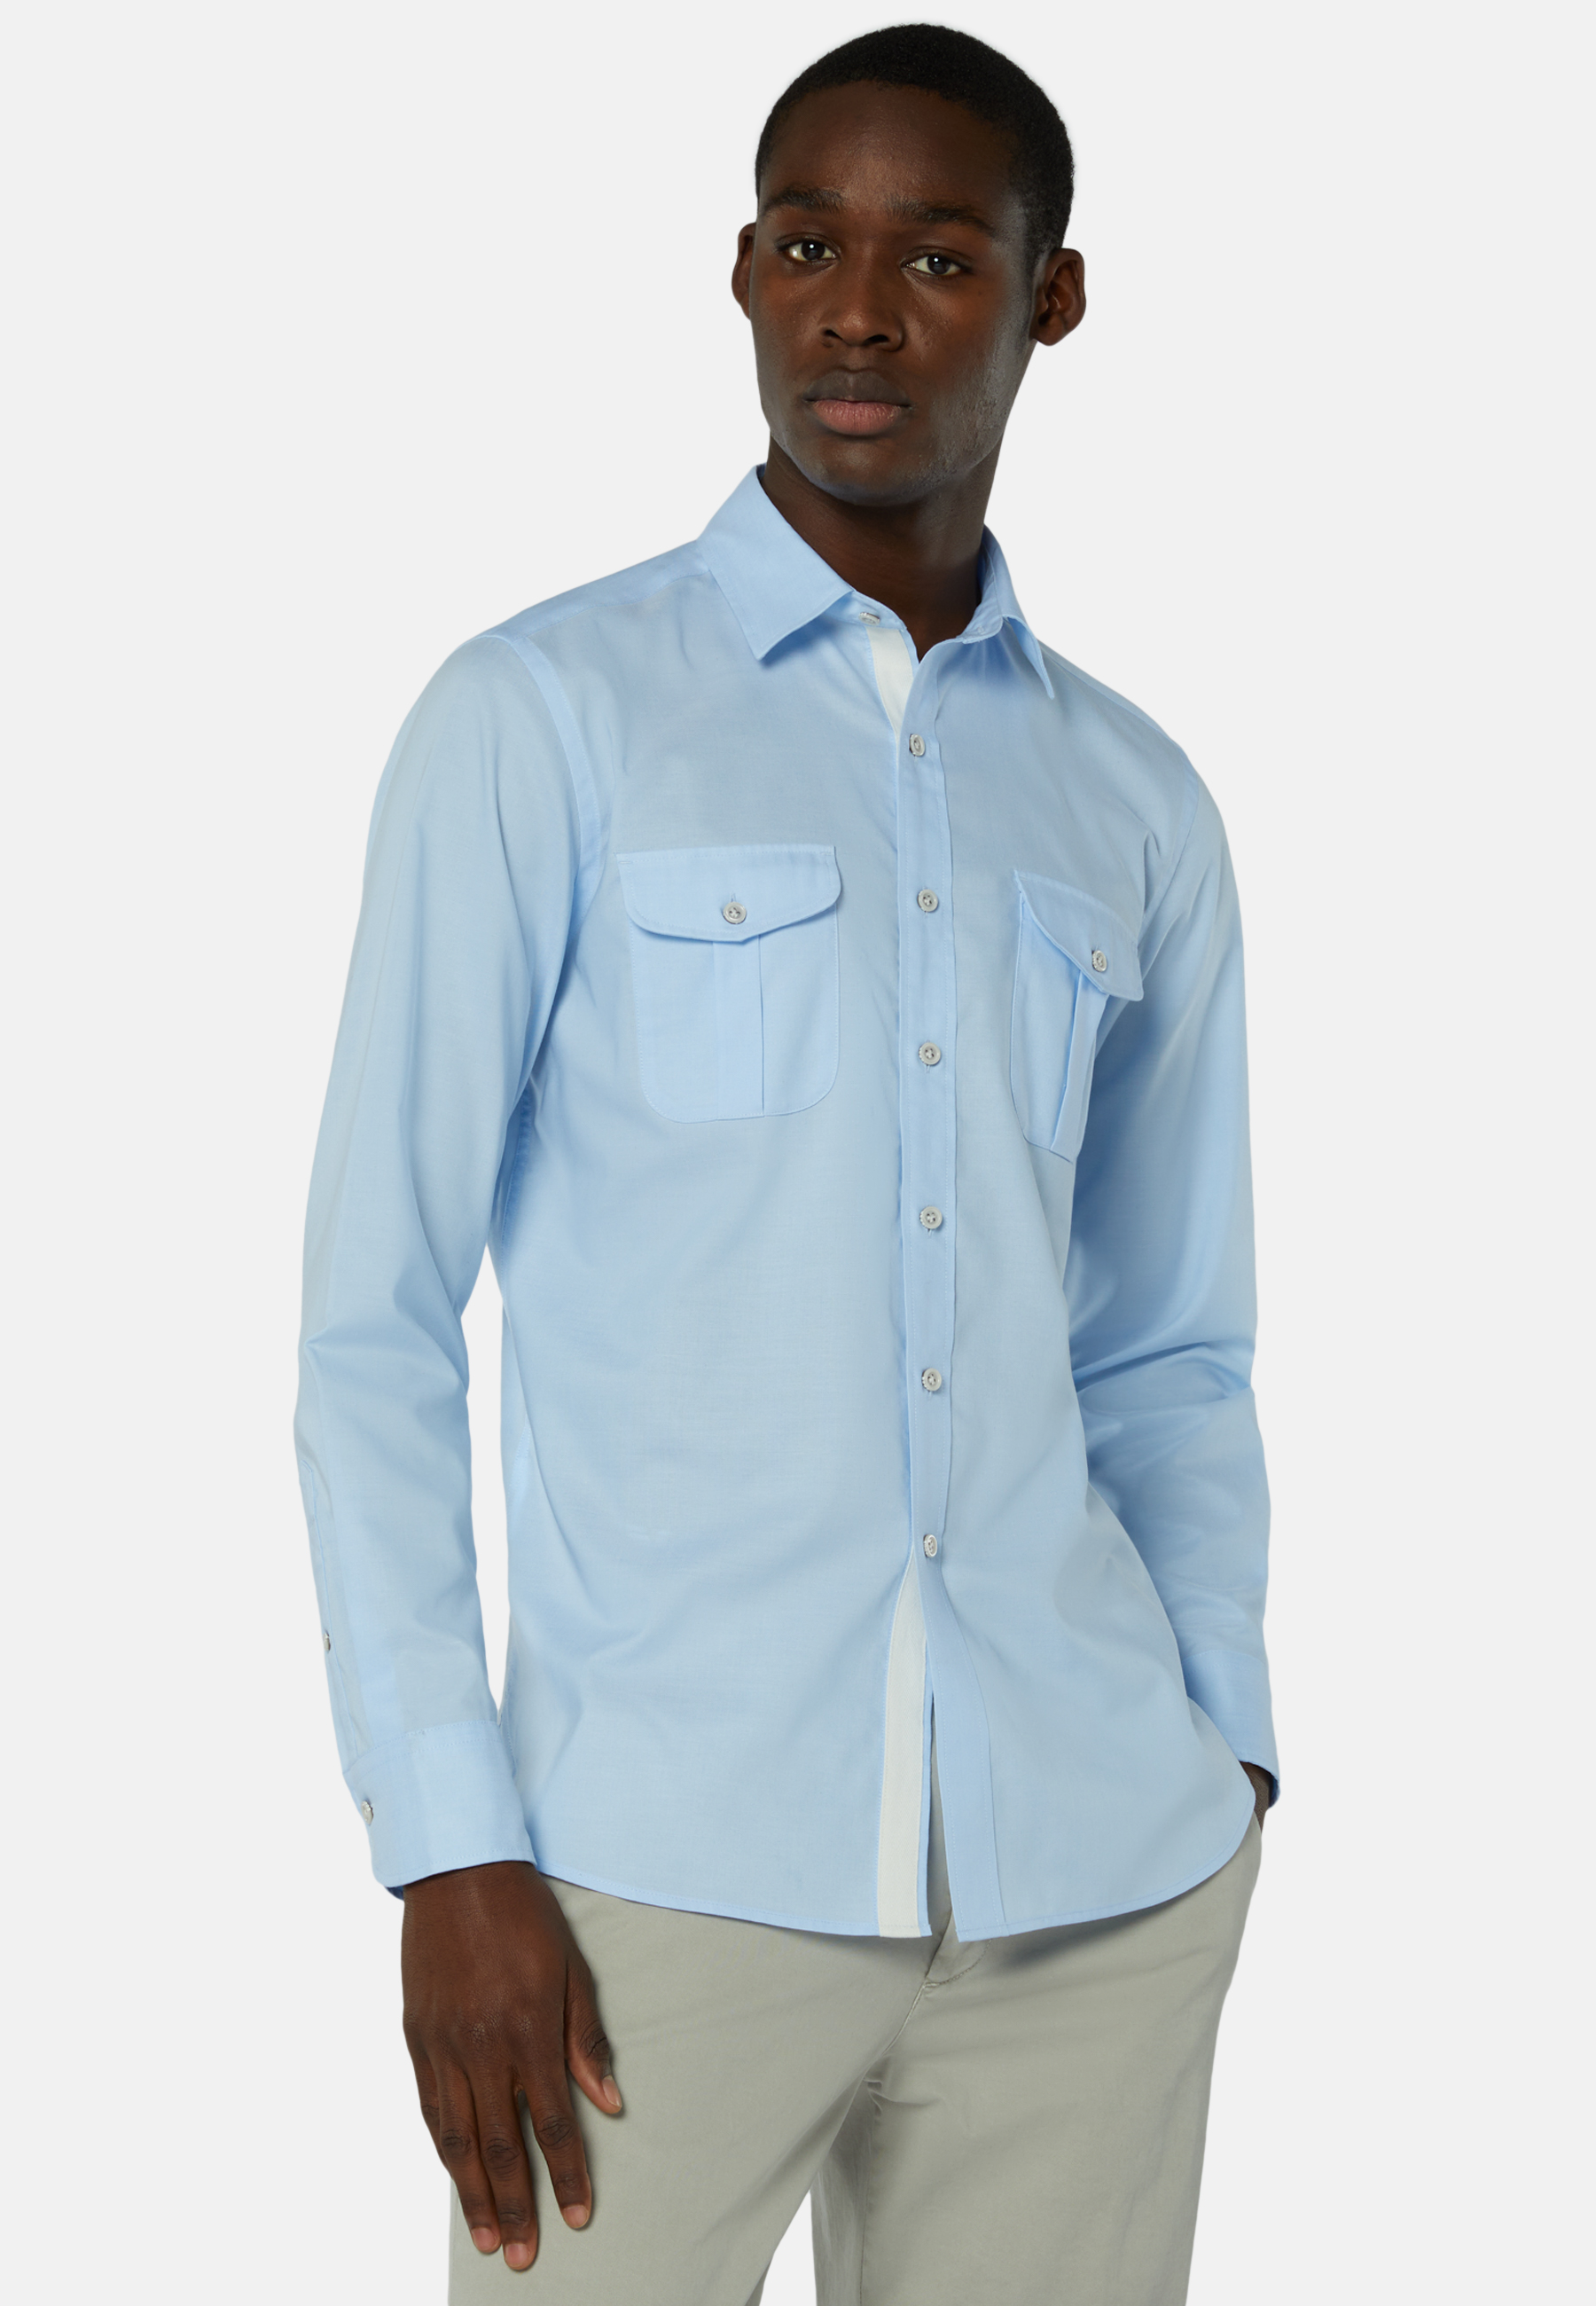 Camisa Oxford azul celeste de alto desempenho de ajuste regular